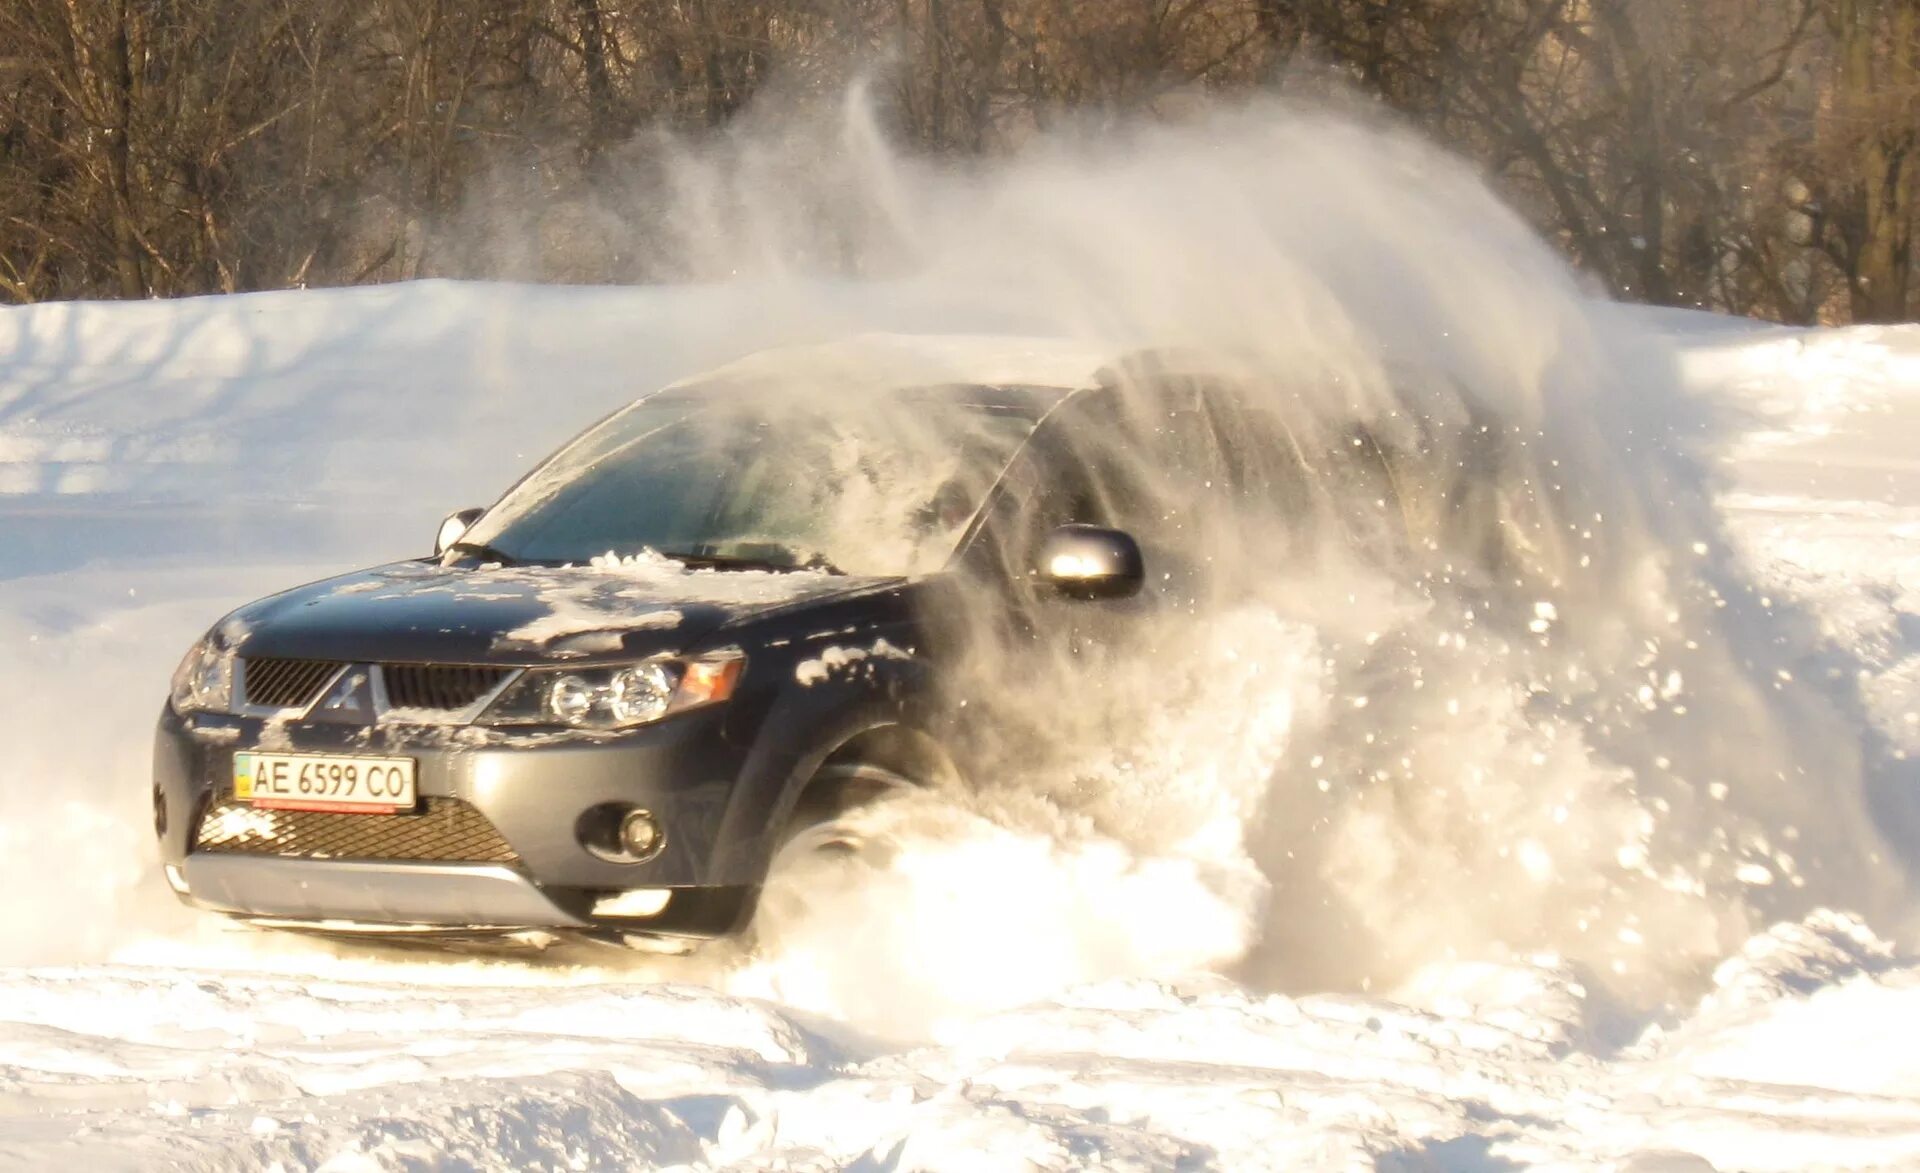 Drifting snow. Outlander XL дрифт. Машина в снегу. Машина зимой. Машина в сугробе.